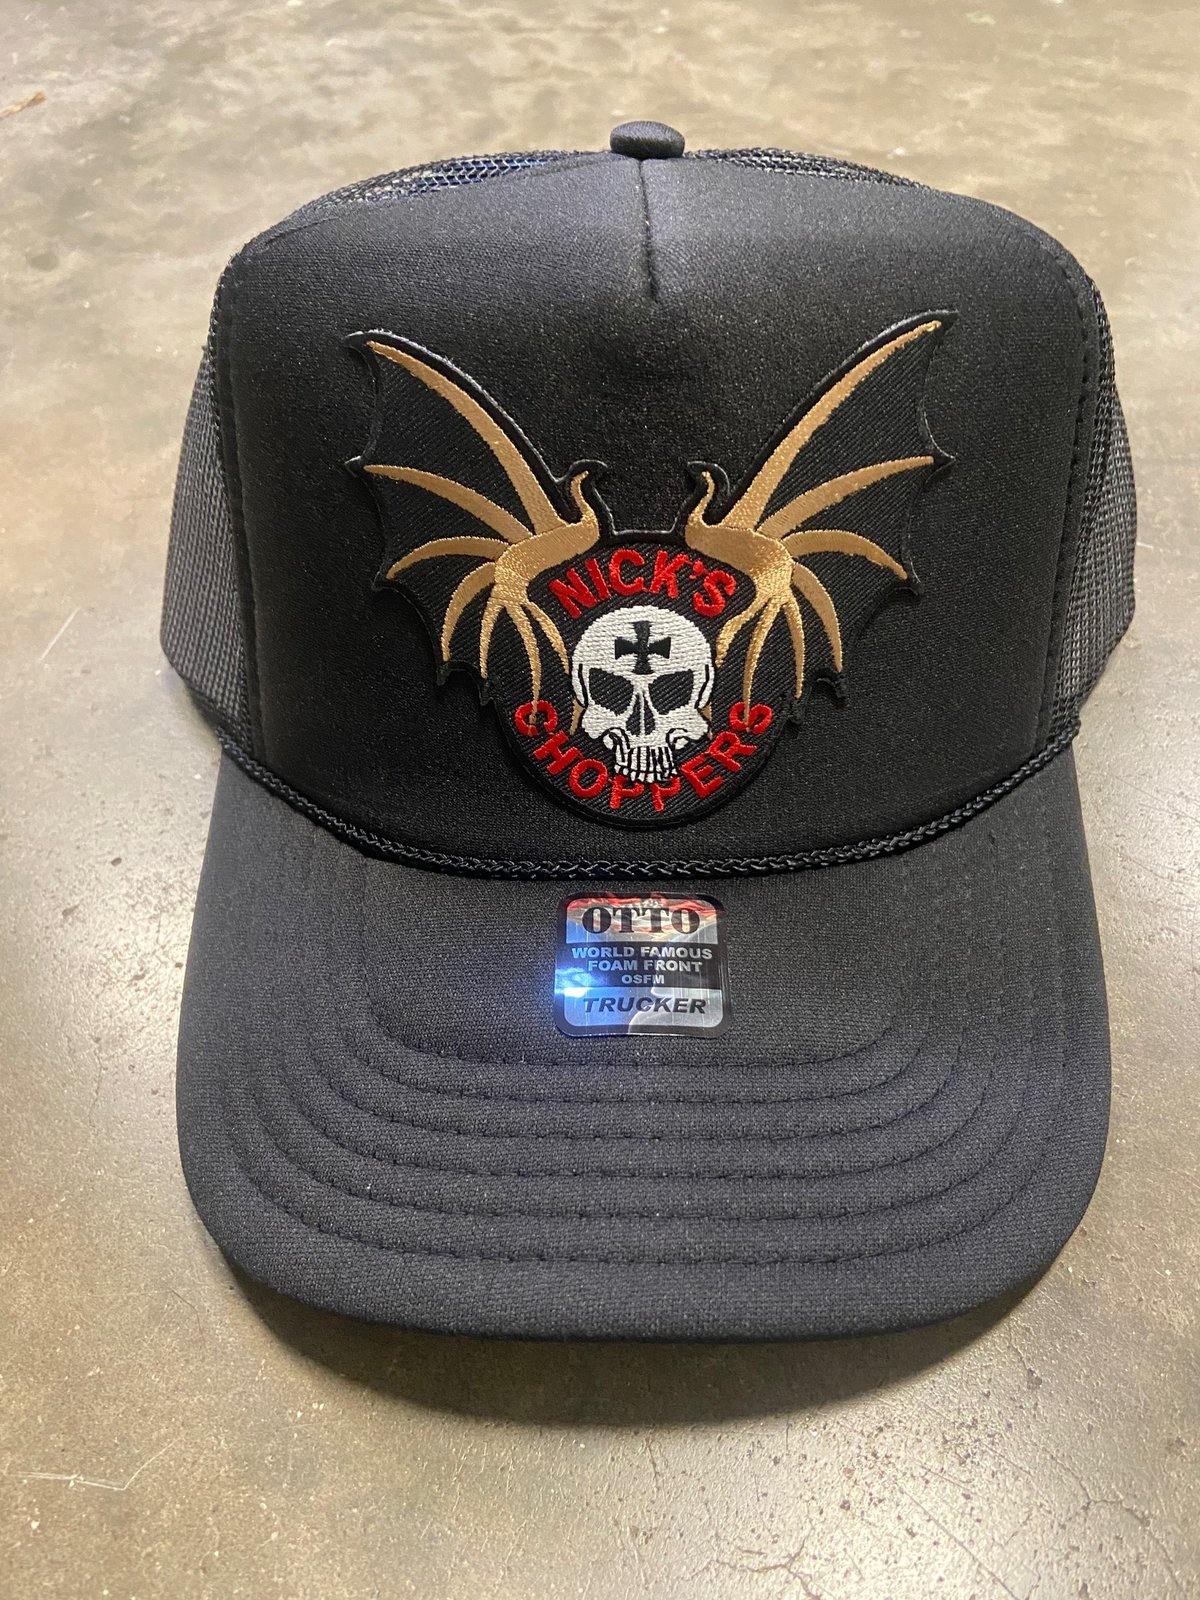 Image of NICK'S CHOPPERS Bad Boy Trucker Hats.